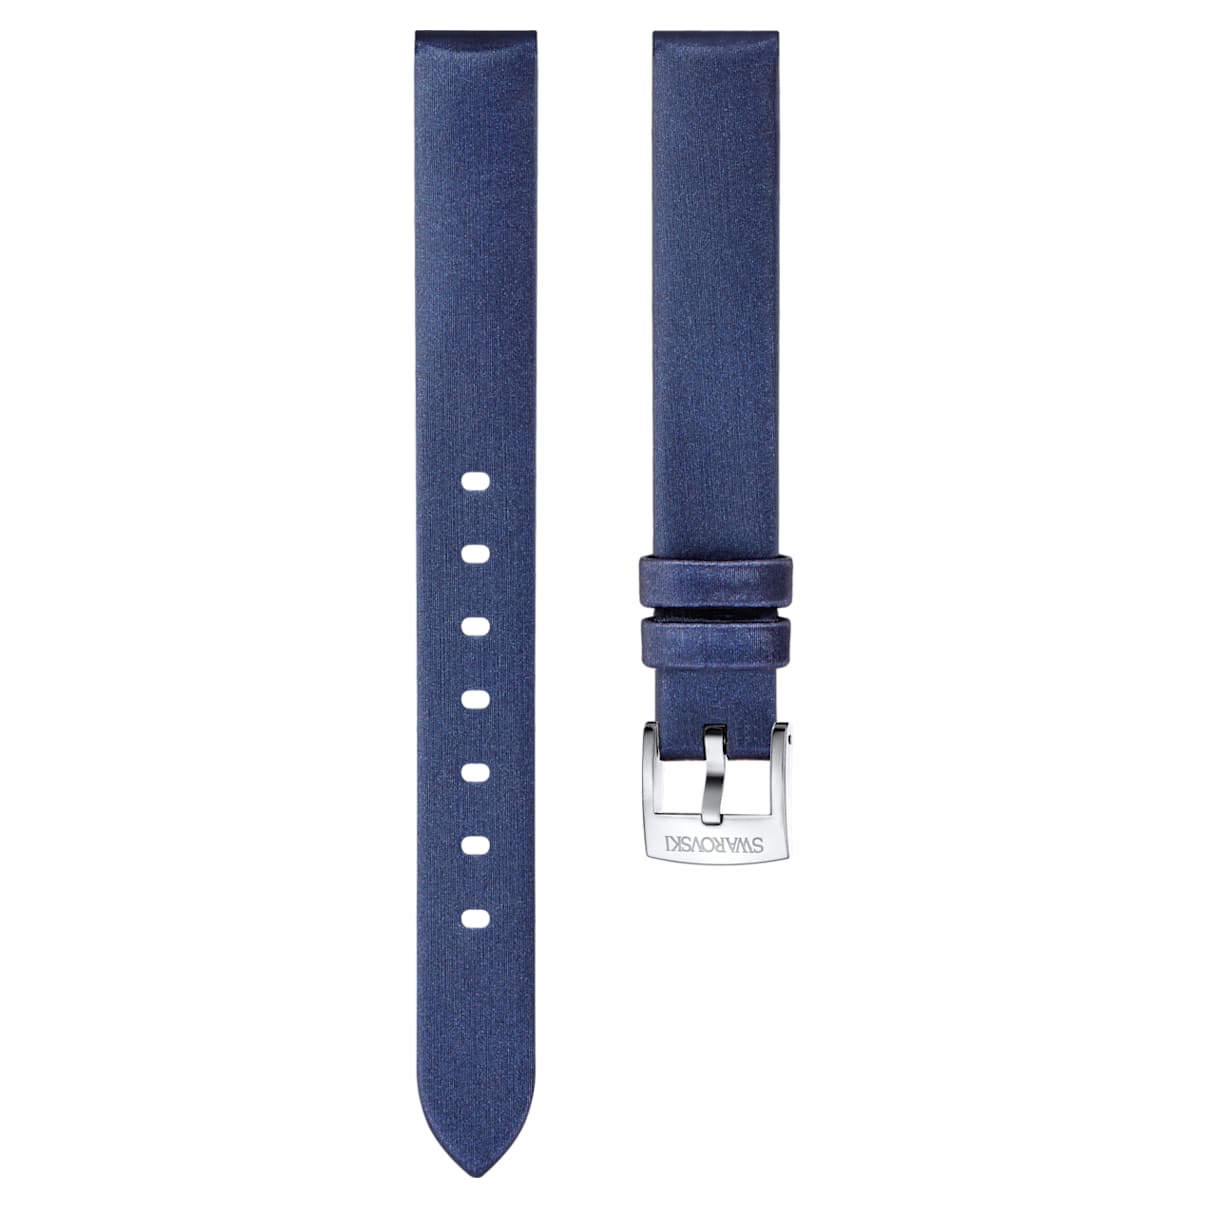 Cinturino per orologio 13mm, seta, blu, acciaio inossidabile